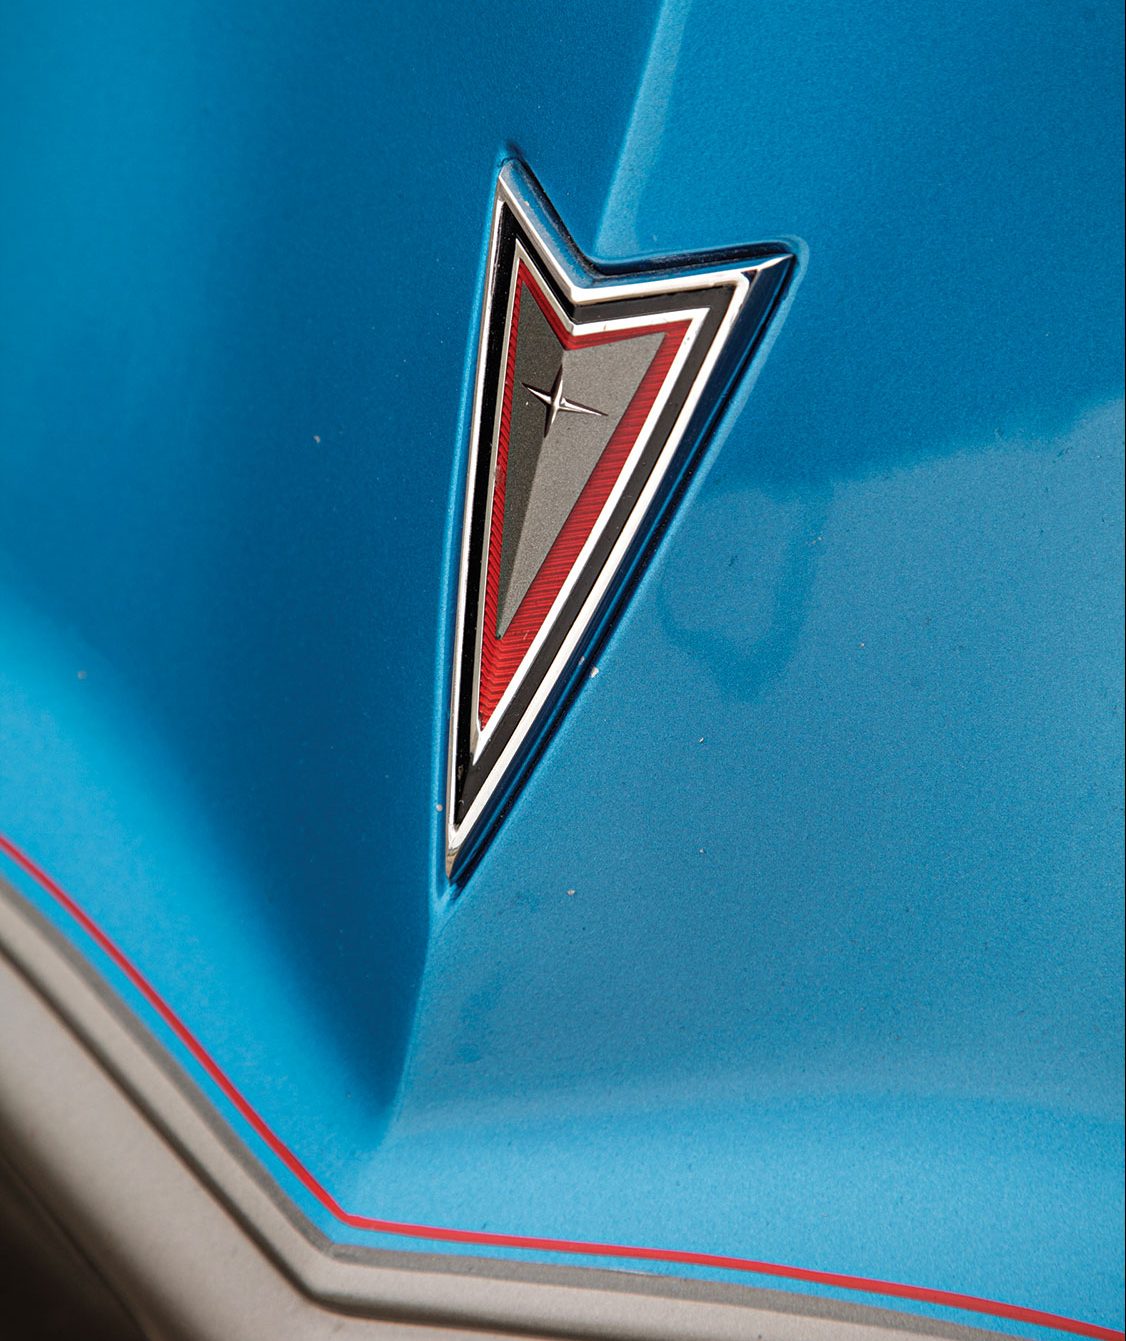 1980 Pontiac Trans-Am emblem